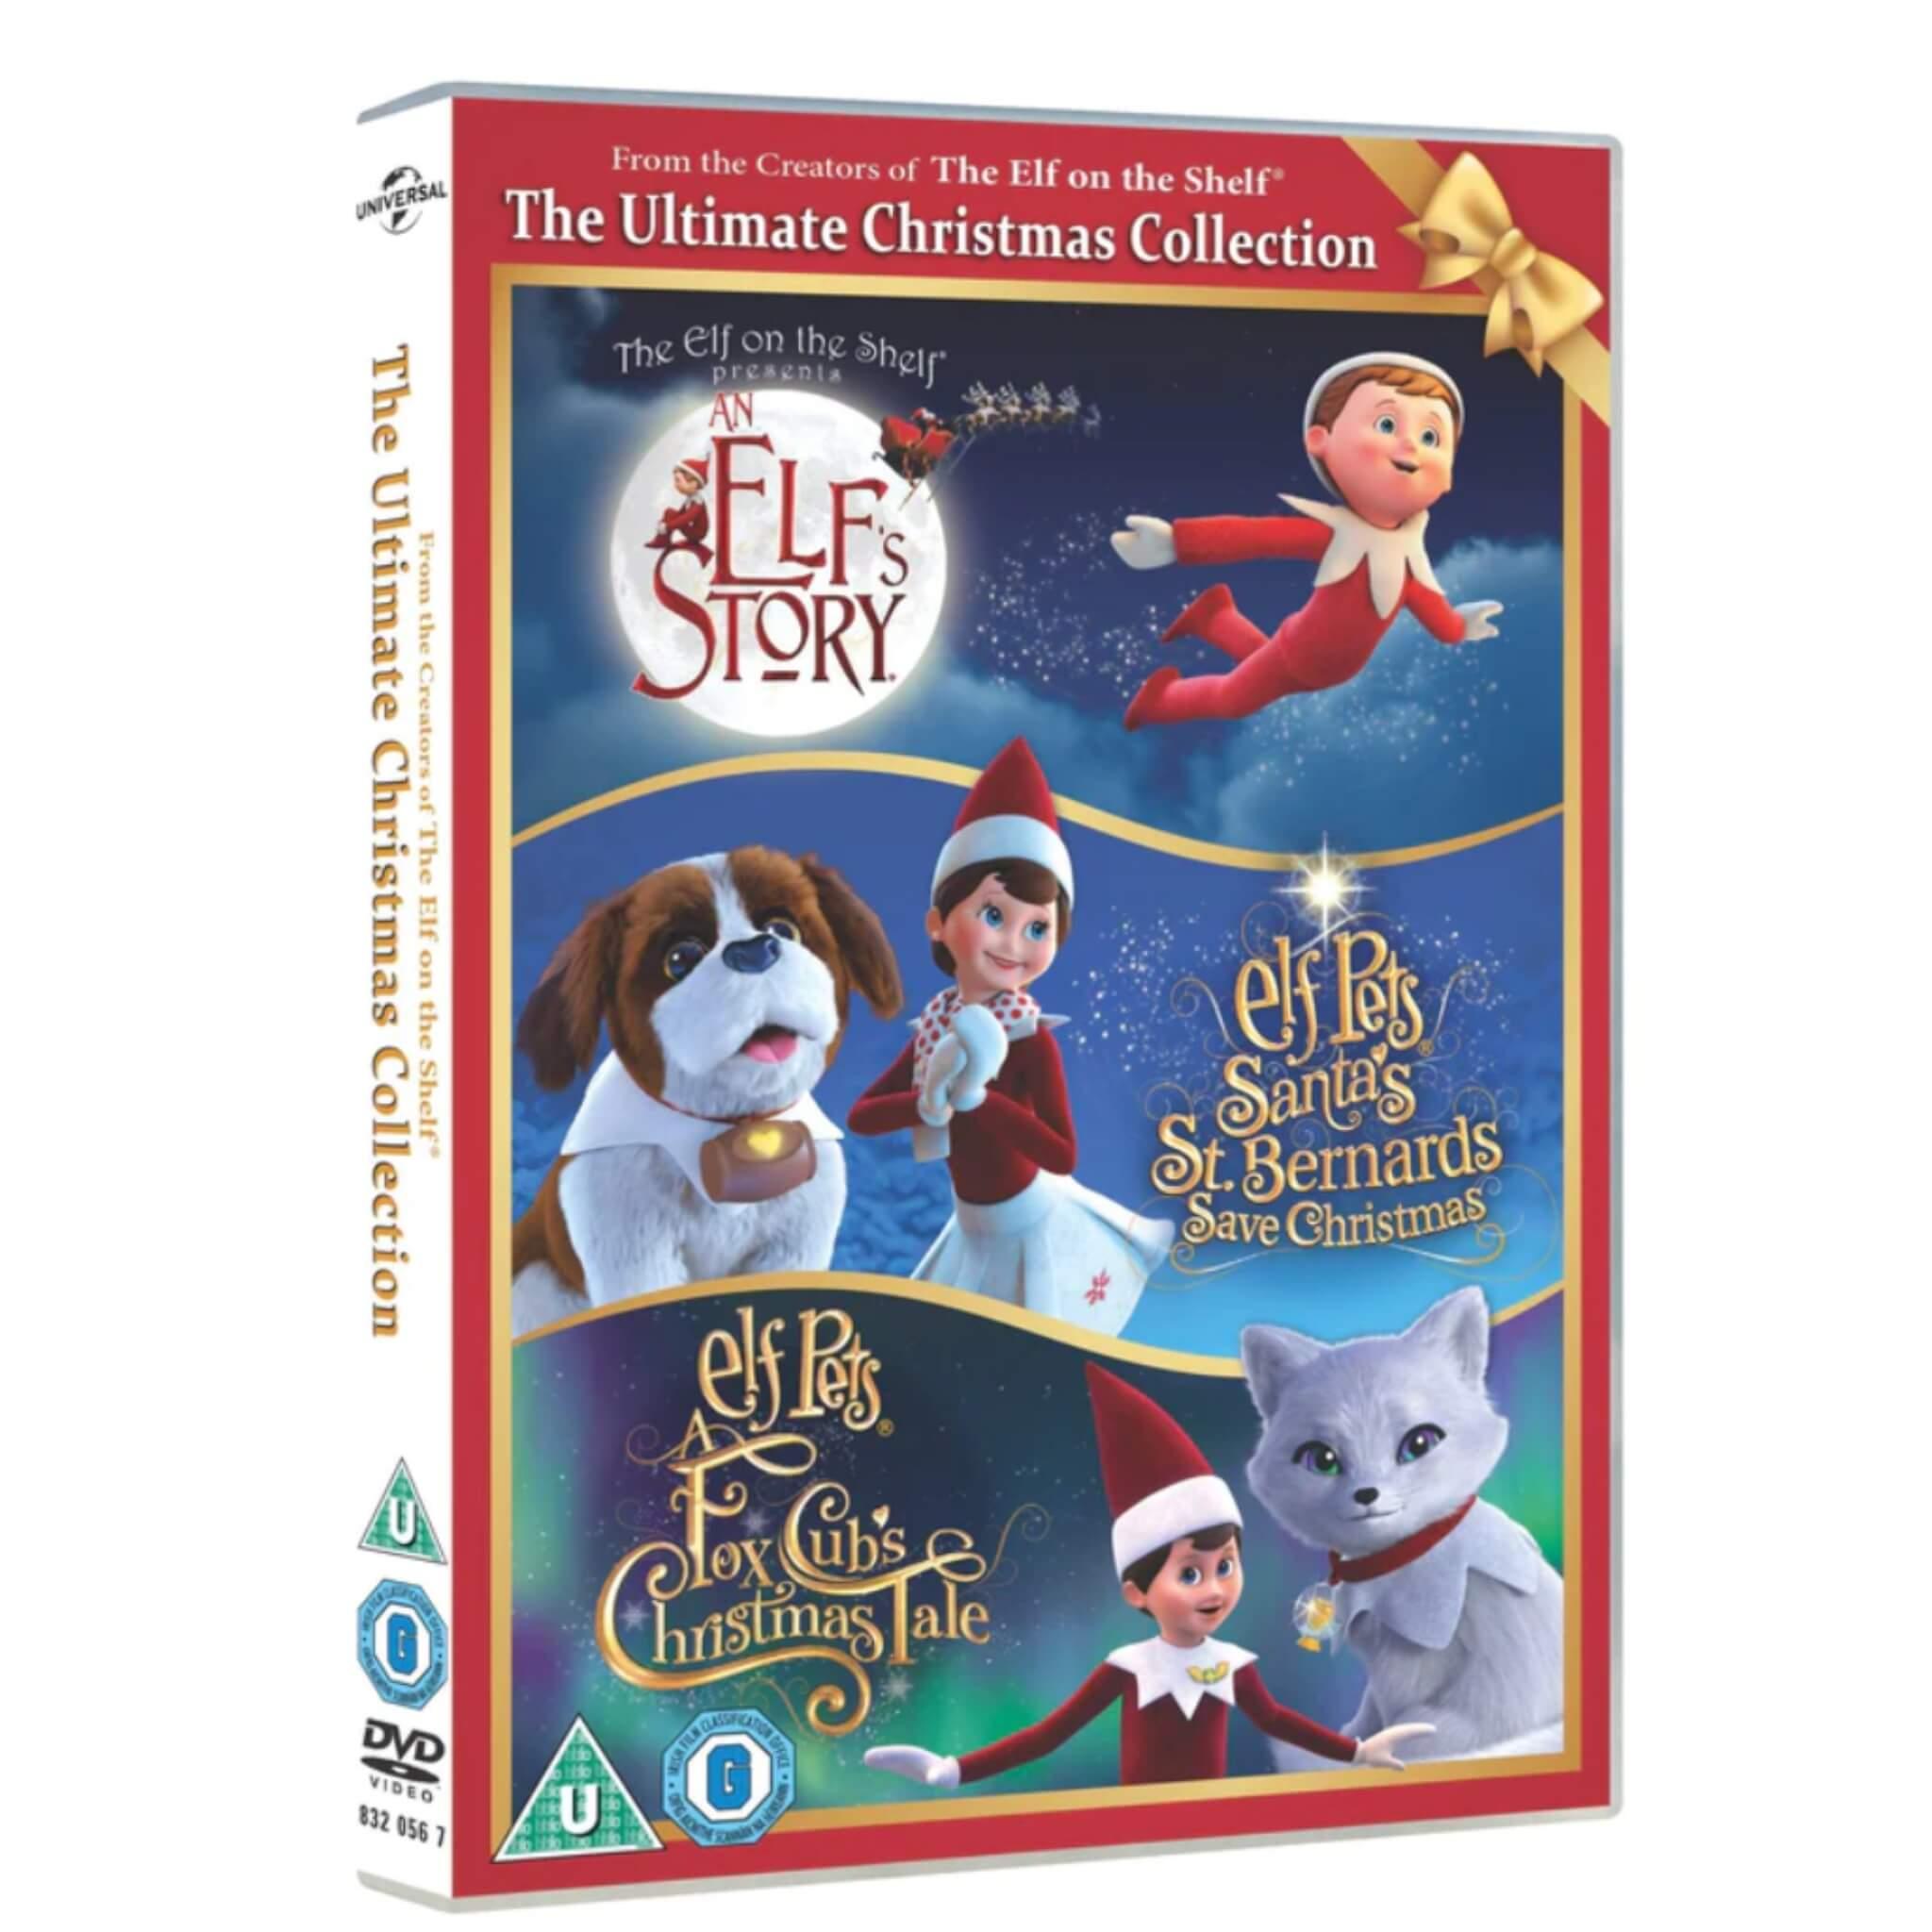 Elf On The Shelf® Movie: Shop An Elf's Story® on DVD at Santa's